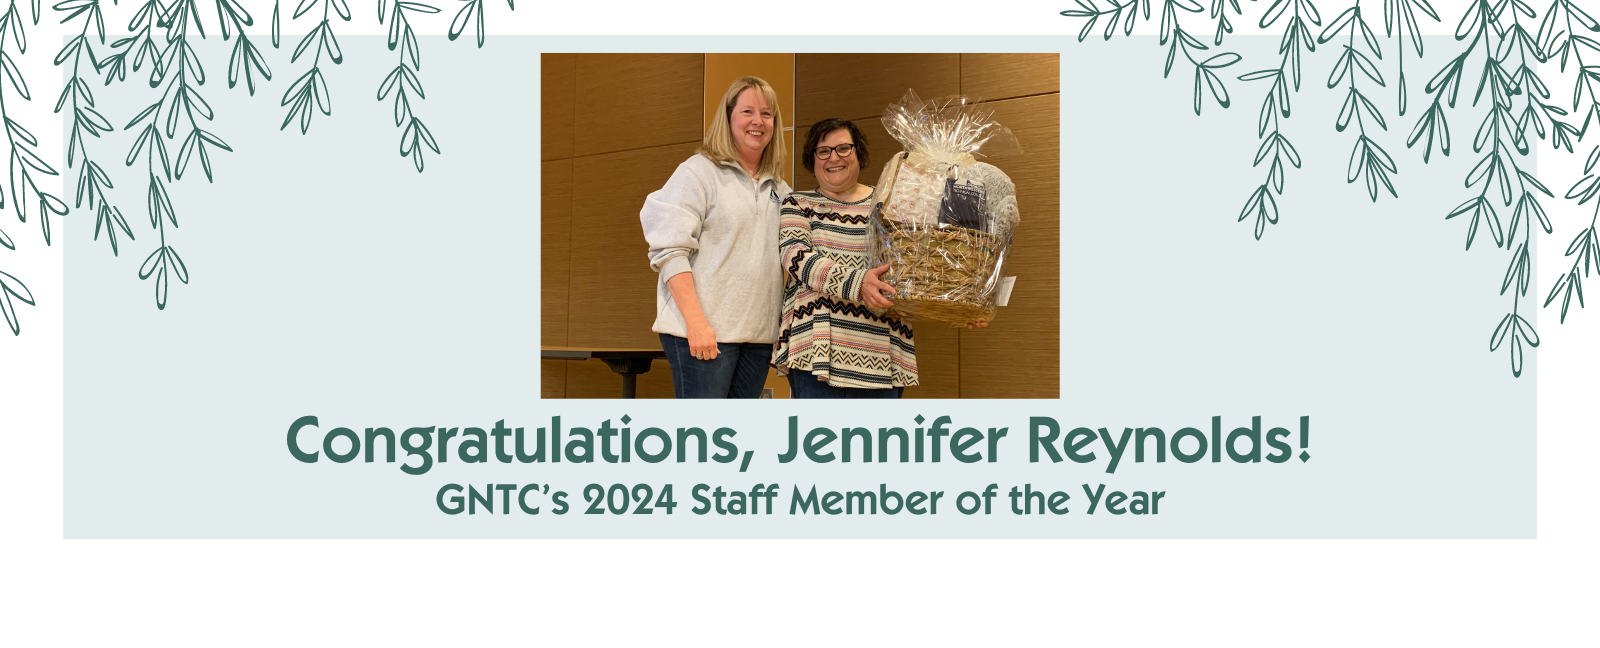 Jennifer Reynolds named 2024 Staff Member of the Year